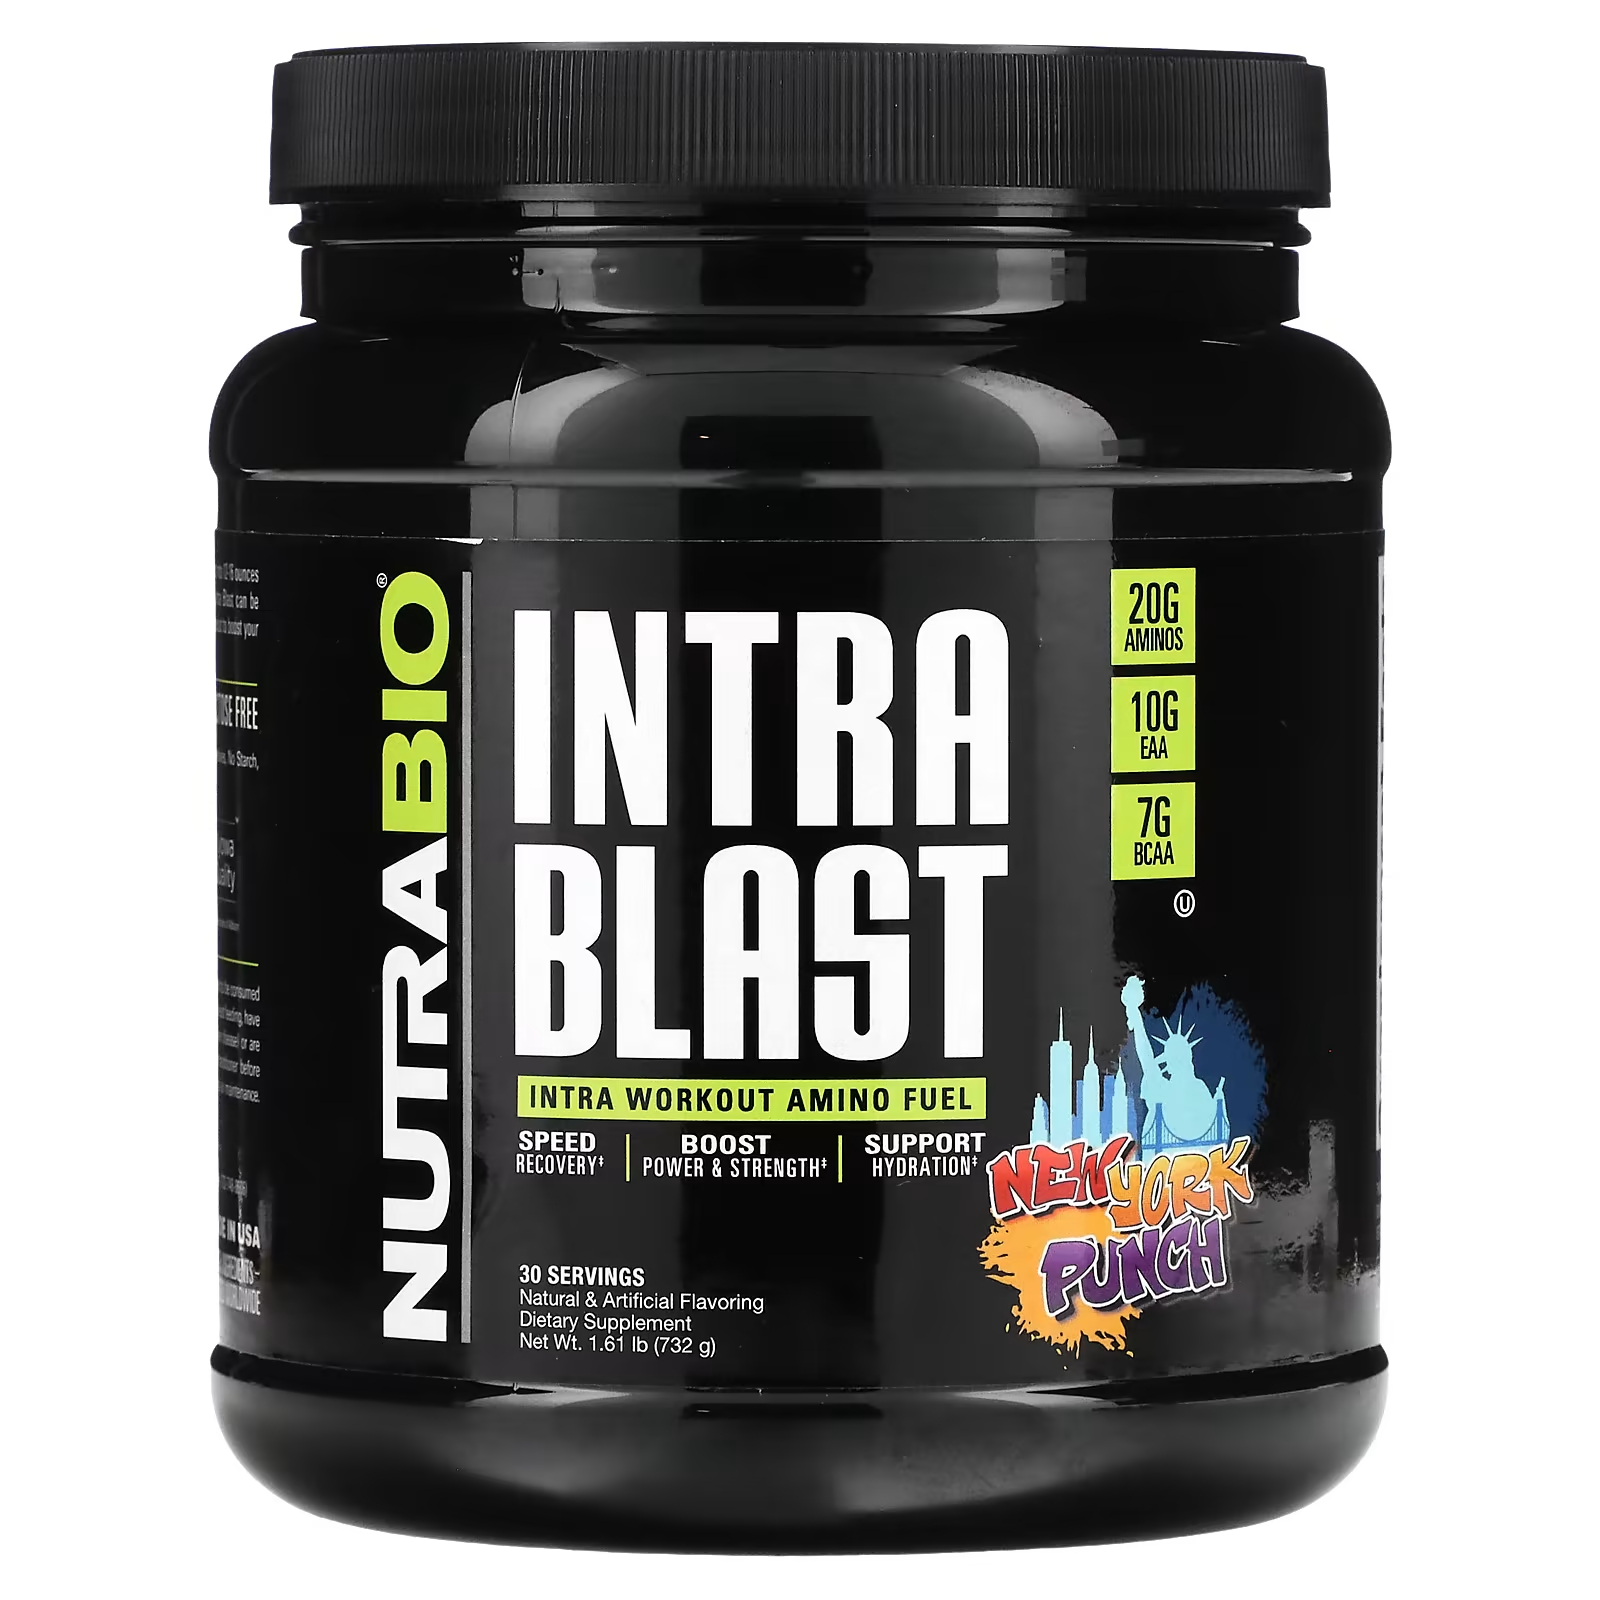 Пищевая добавка NutraBio Intra Blast Intra Workout Muscle Fuel New York Punch nutrabio alpha eaa вишневый лаймовый слаш 1 фунт 455 г